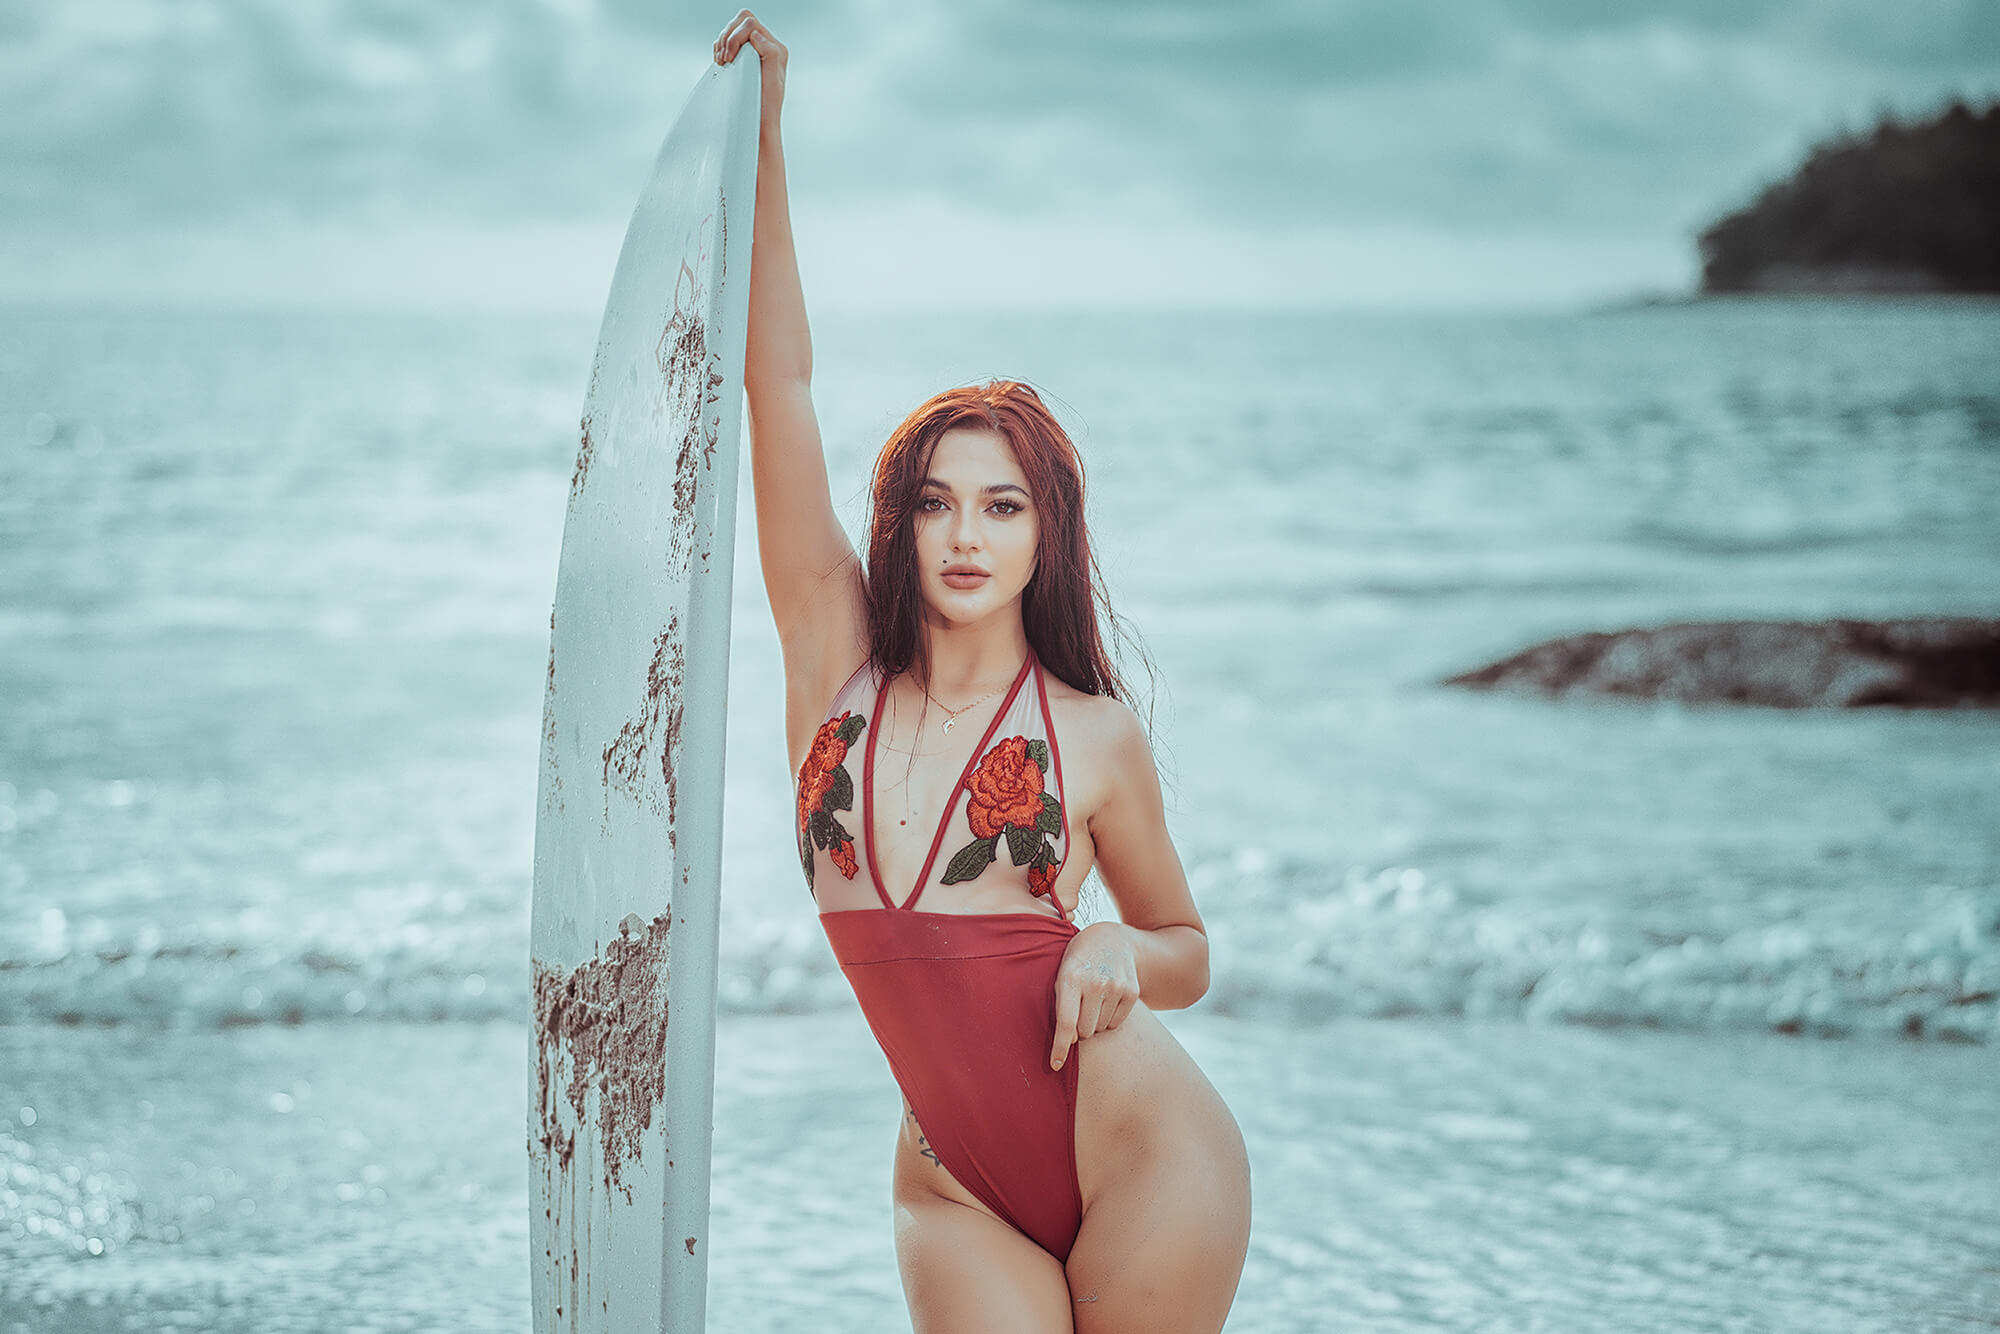 Bikini portrait surfboard photoshoot